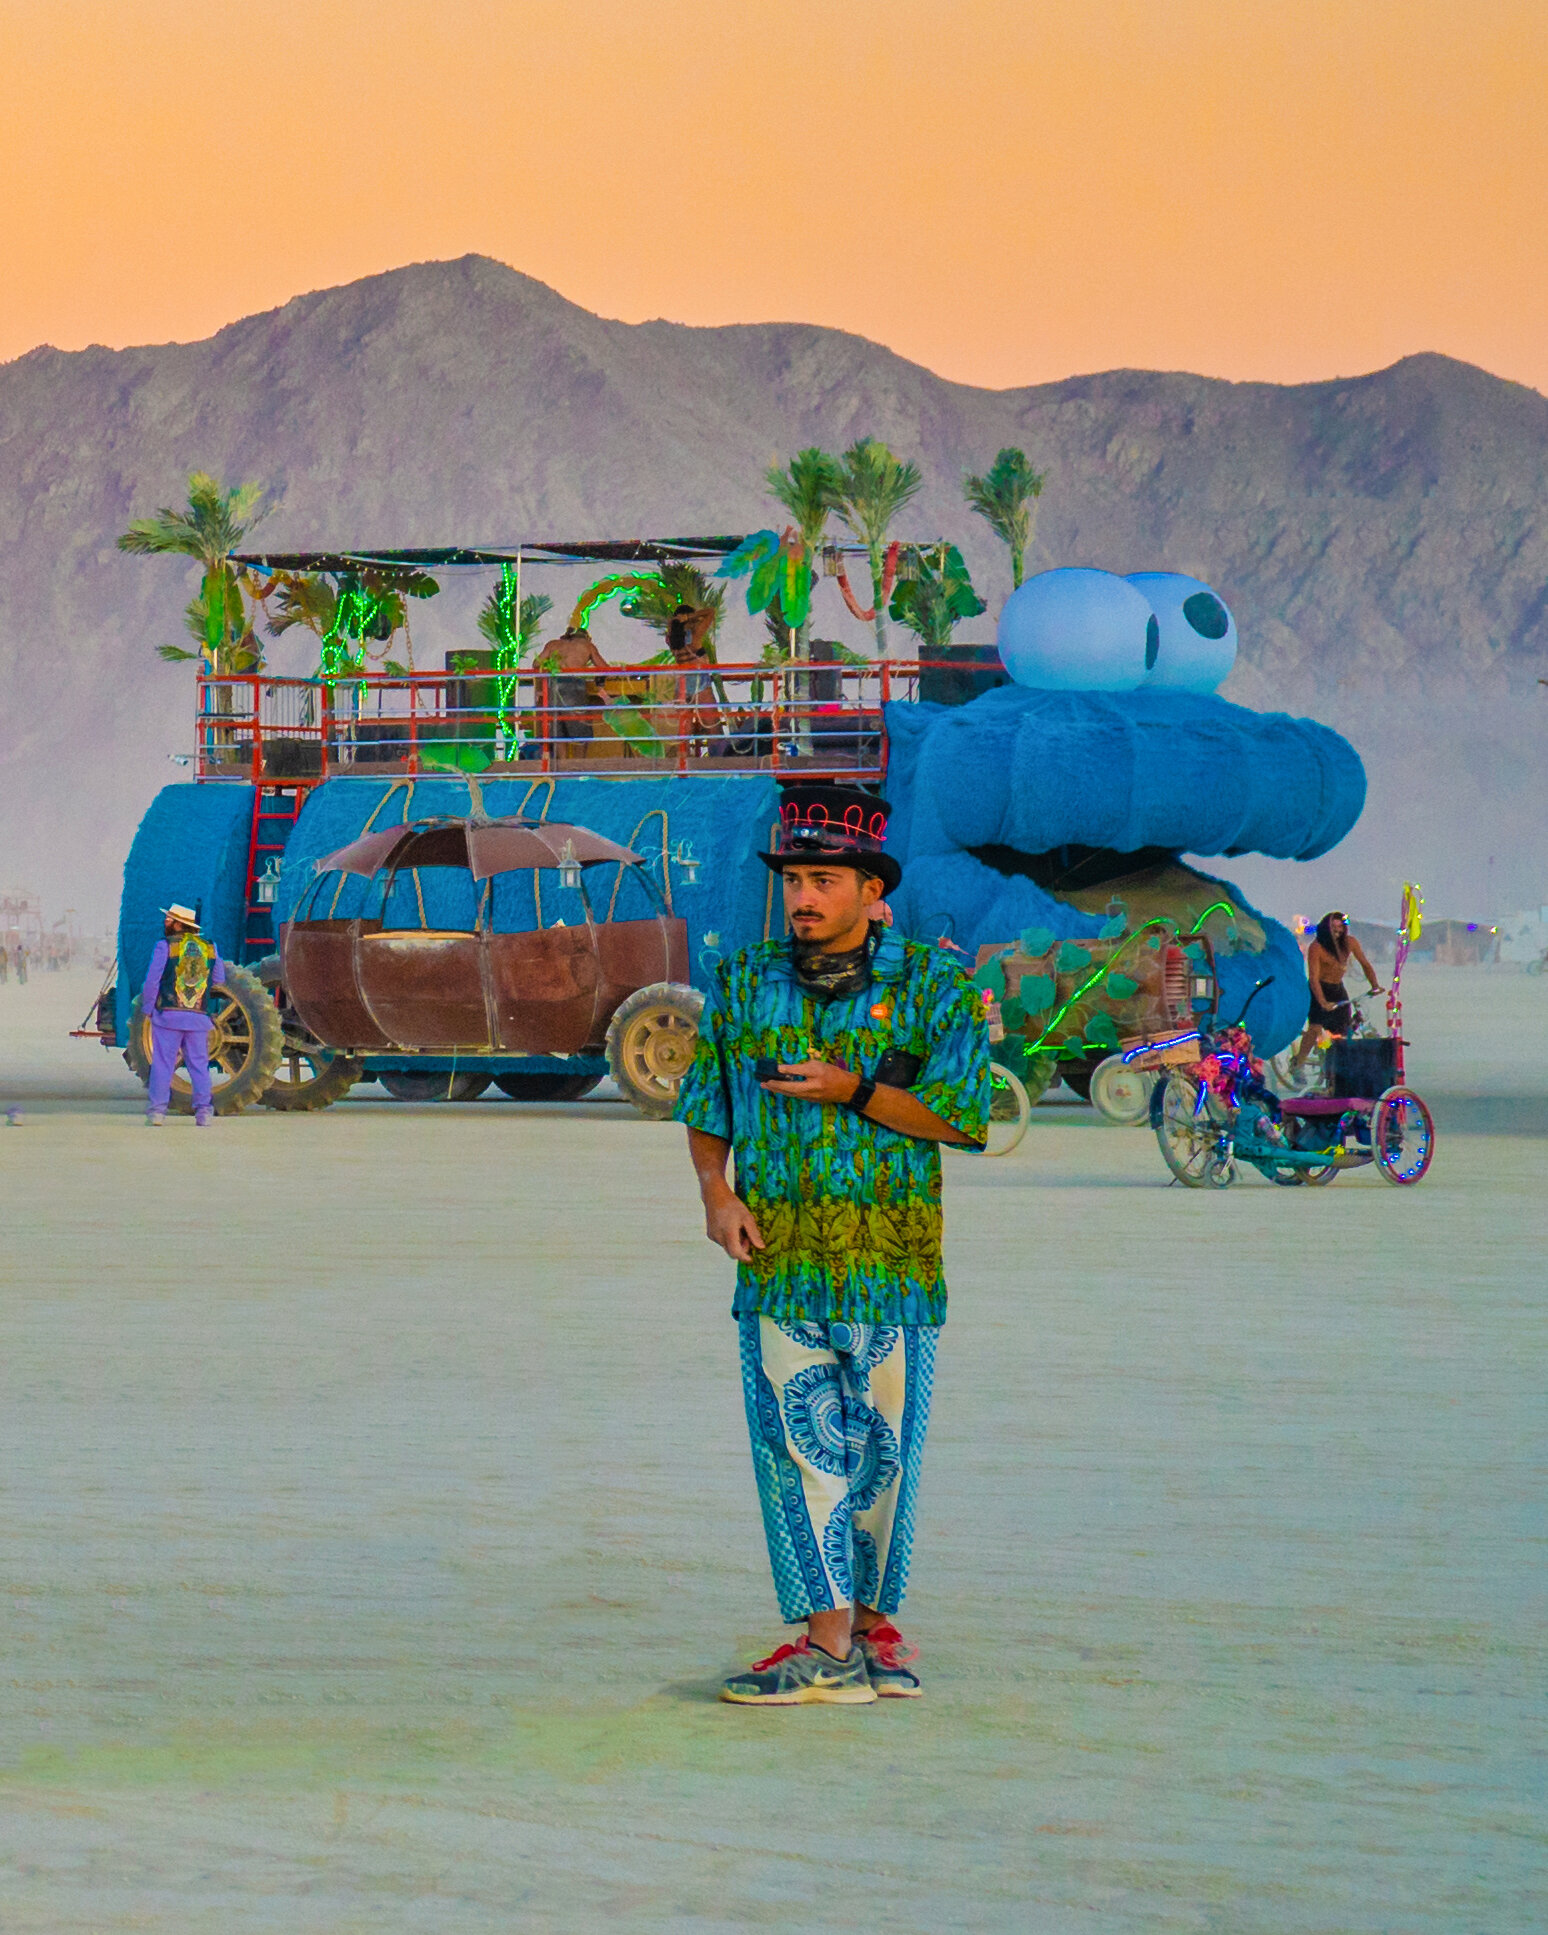 Burning Man 2019 - Bad Man Bus Mutant Vehicle